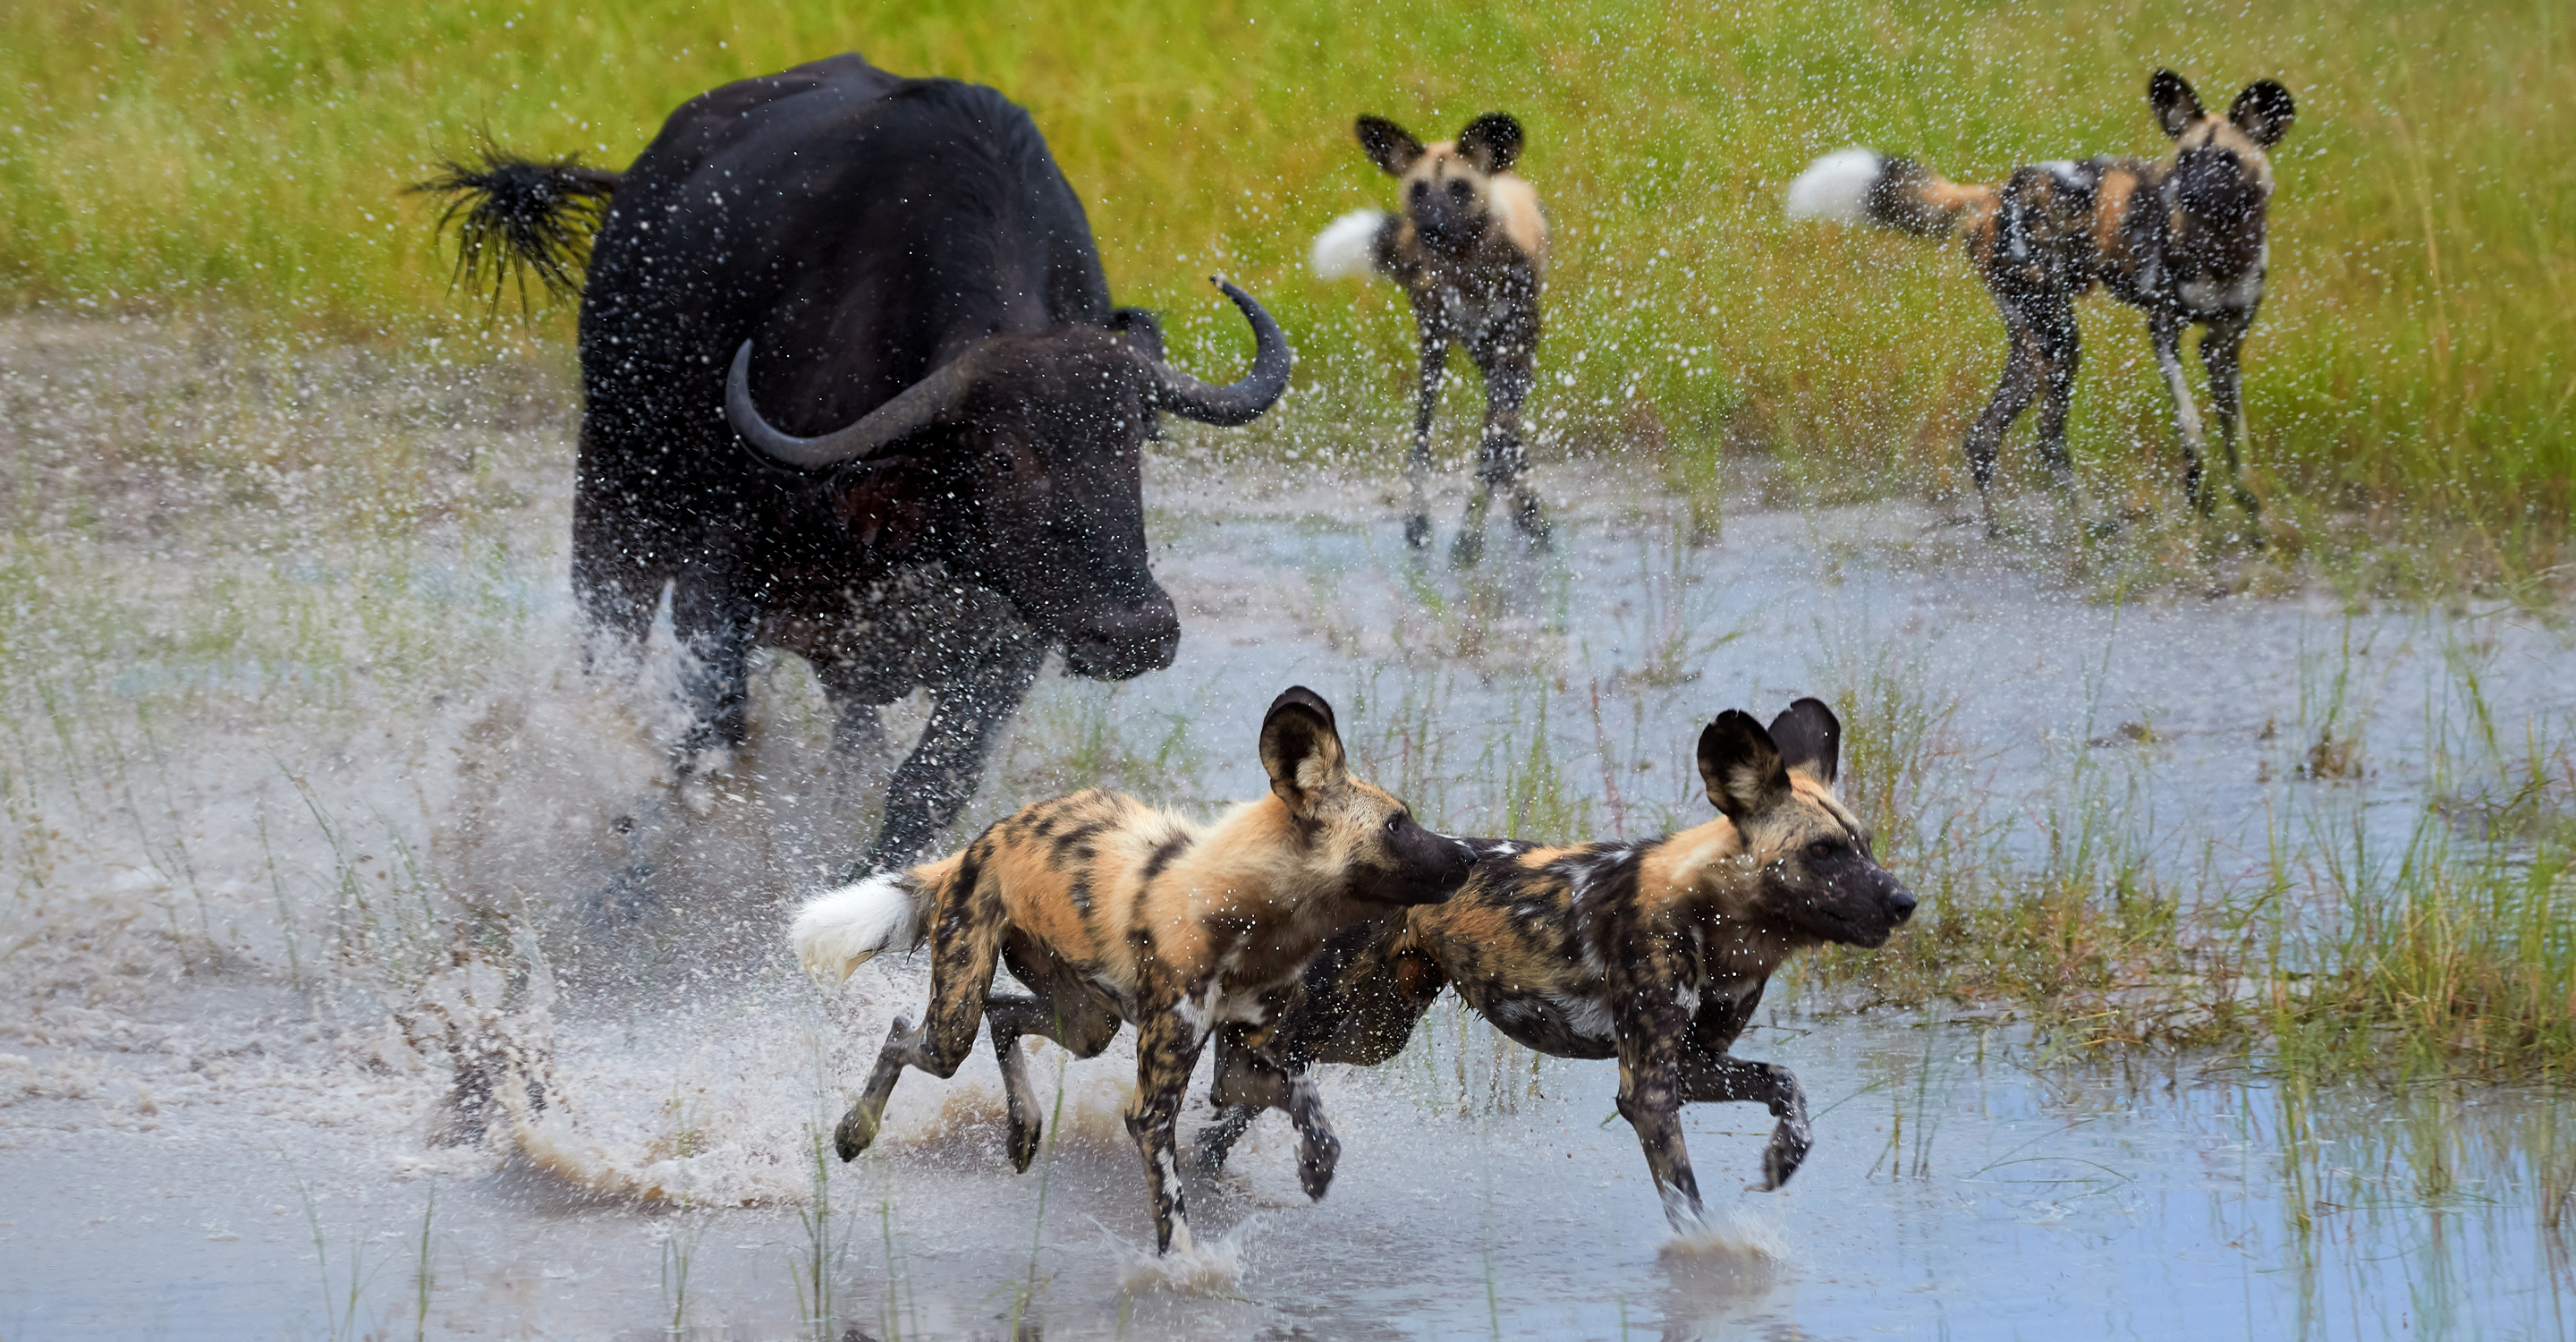 African water buffalo chasing African wild dogs in the Okavango Delta, Botswana